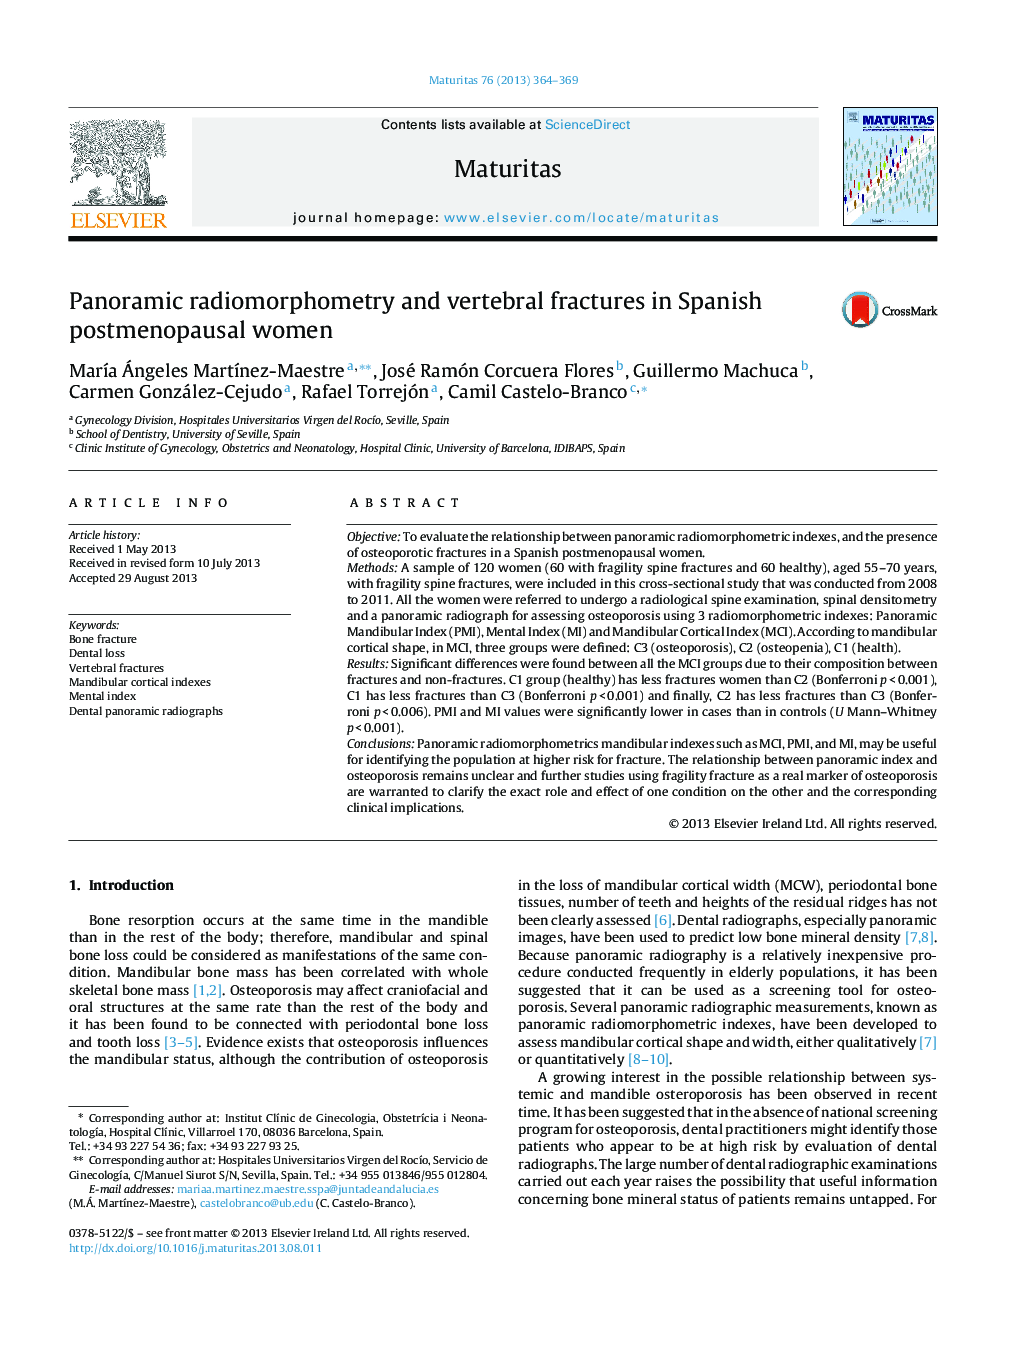 Panoramic radiomorphometry and vertebral fractures in Spanish postmenopausal women